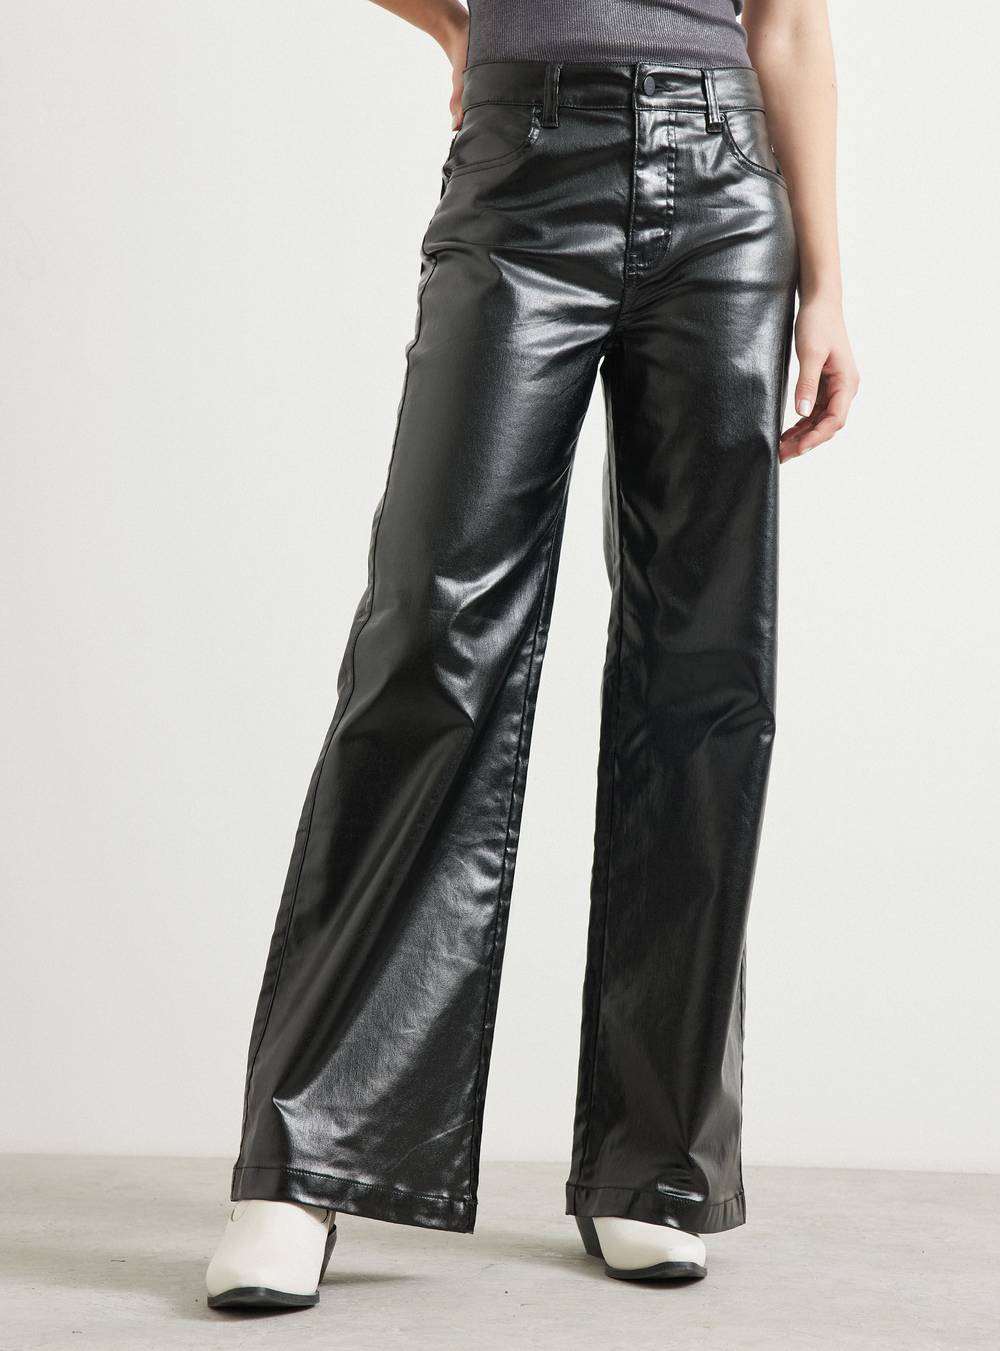 Alaniz jeans tela color plata metalizada carbón 't 46